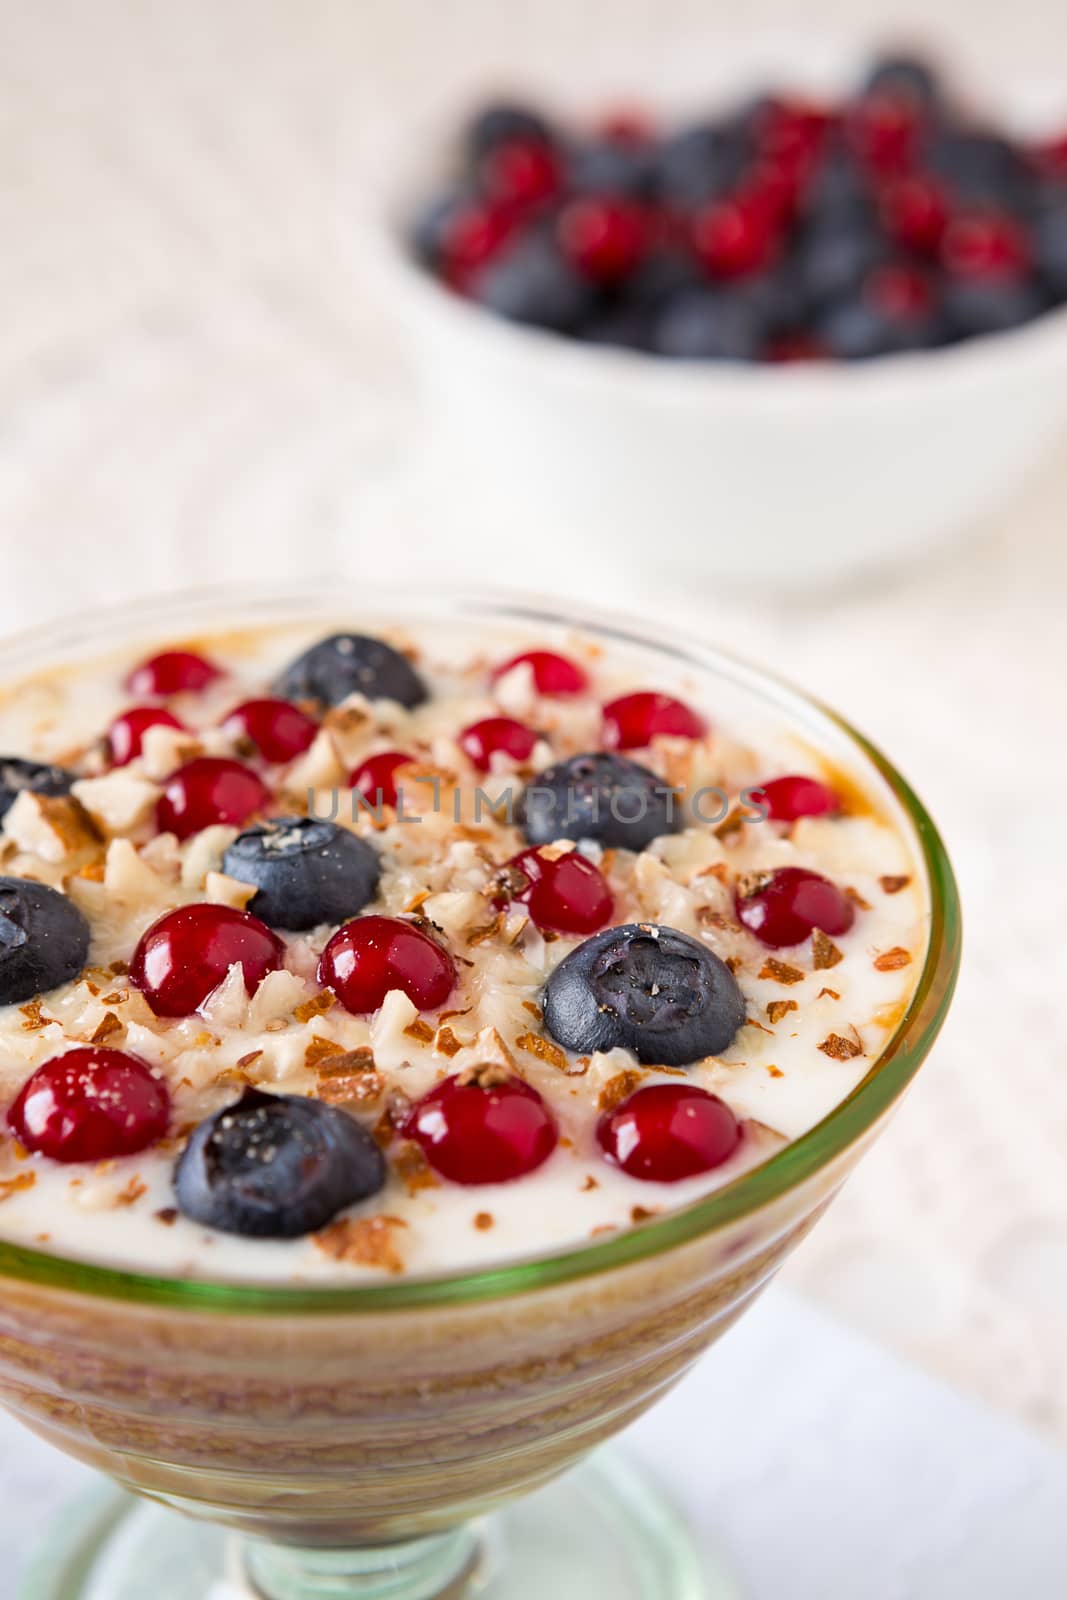 Closeup of a yogurt dessert with berries and almonds by LuigiMorbidelli